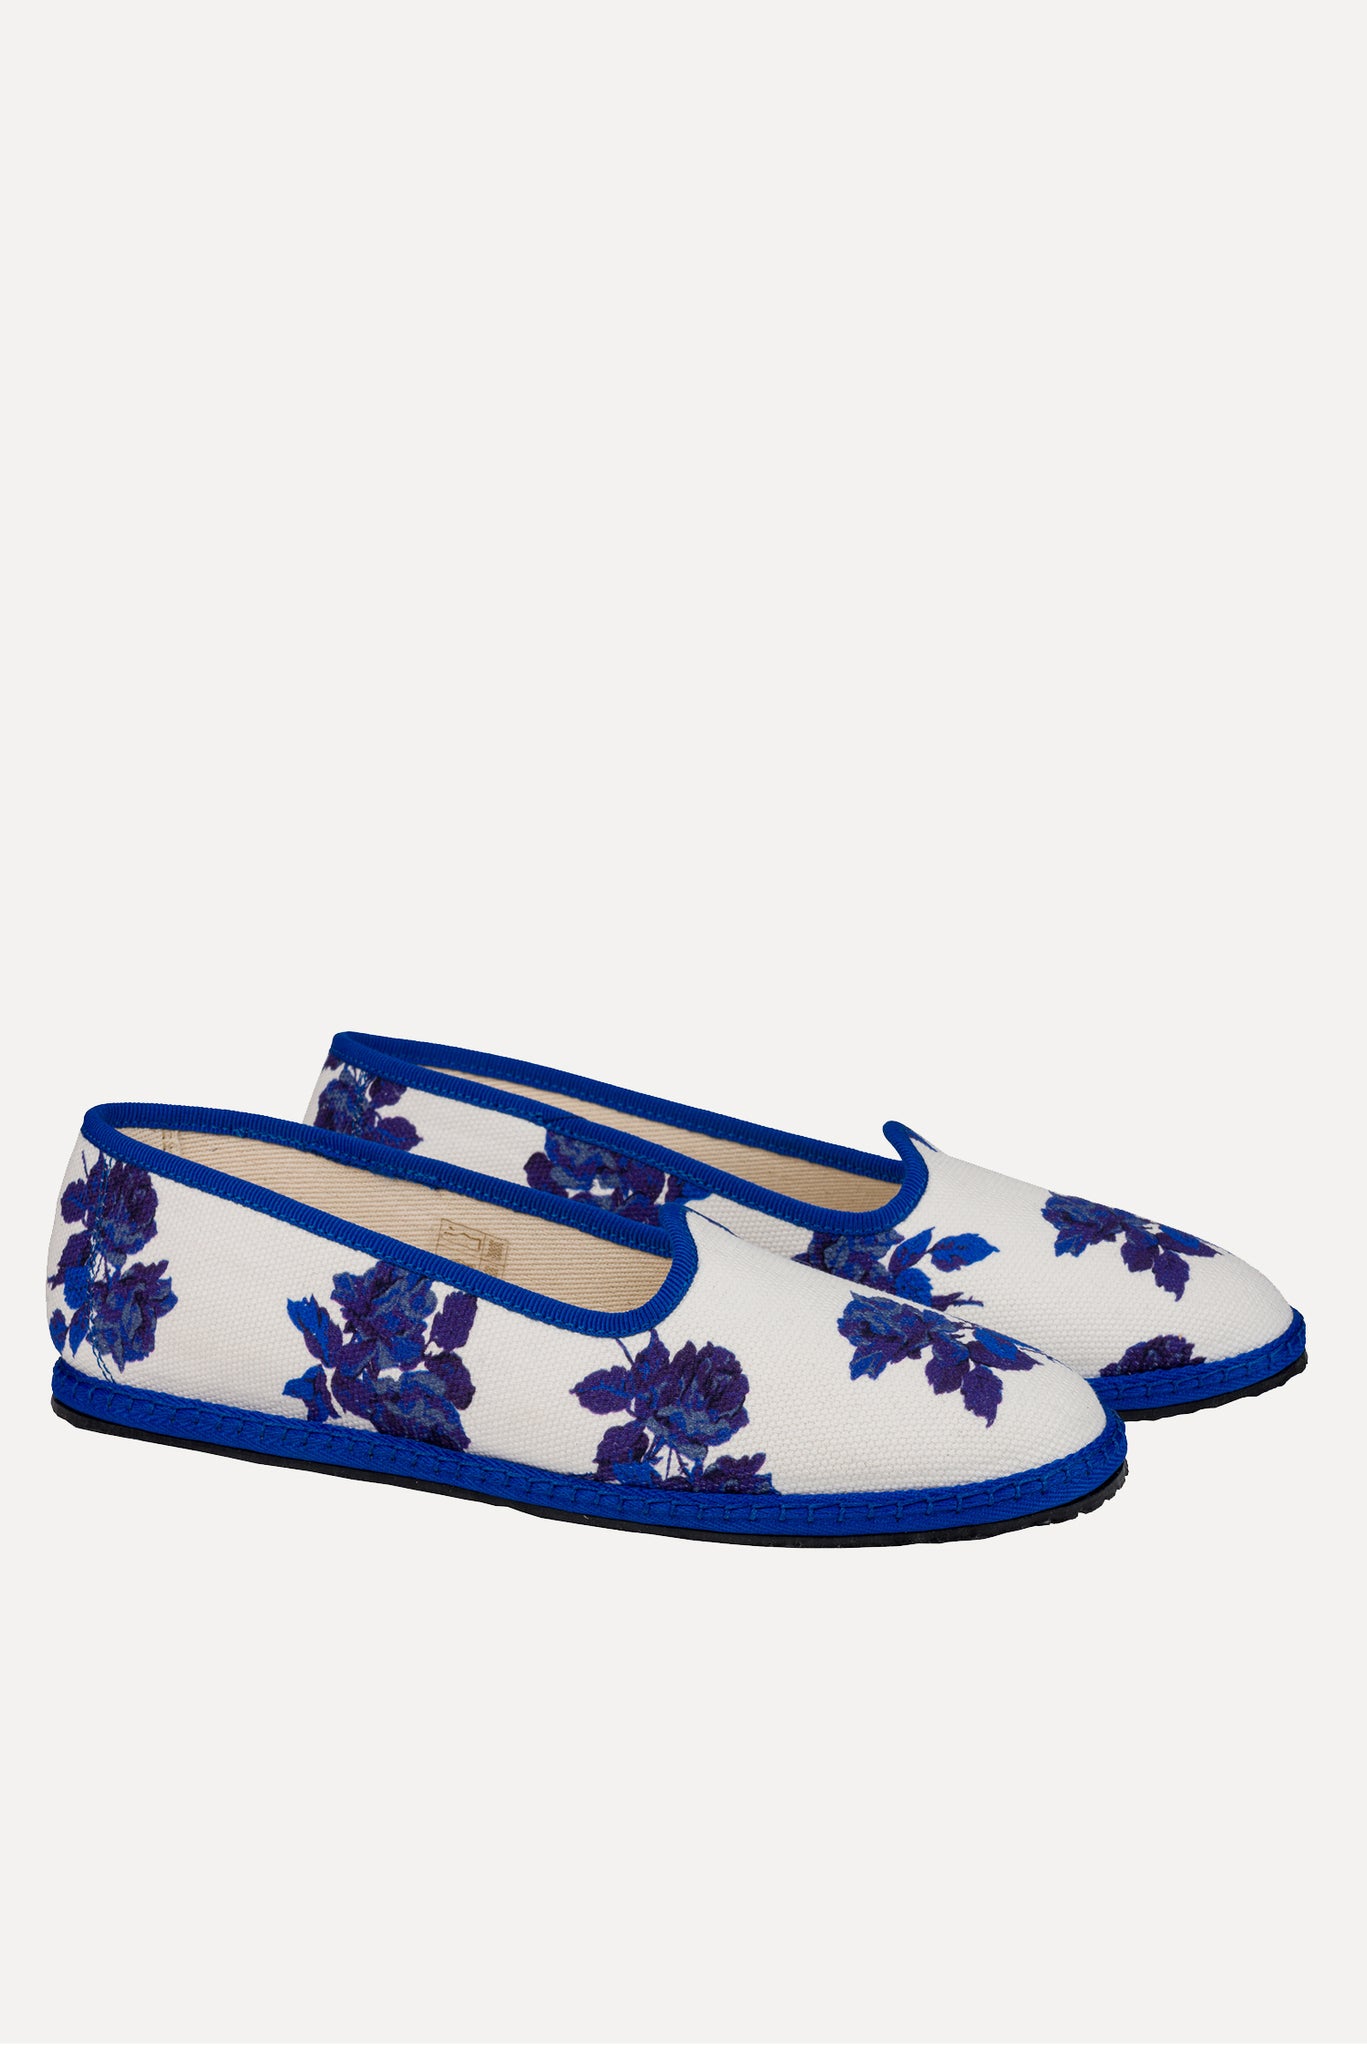 Classic Furlane Shoe | Emilia Wickstead x Vibi Venezia Blue Roses Print Deck Shoe | Emilia Wickstead